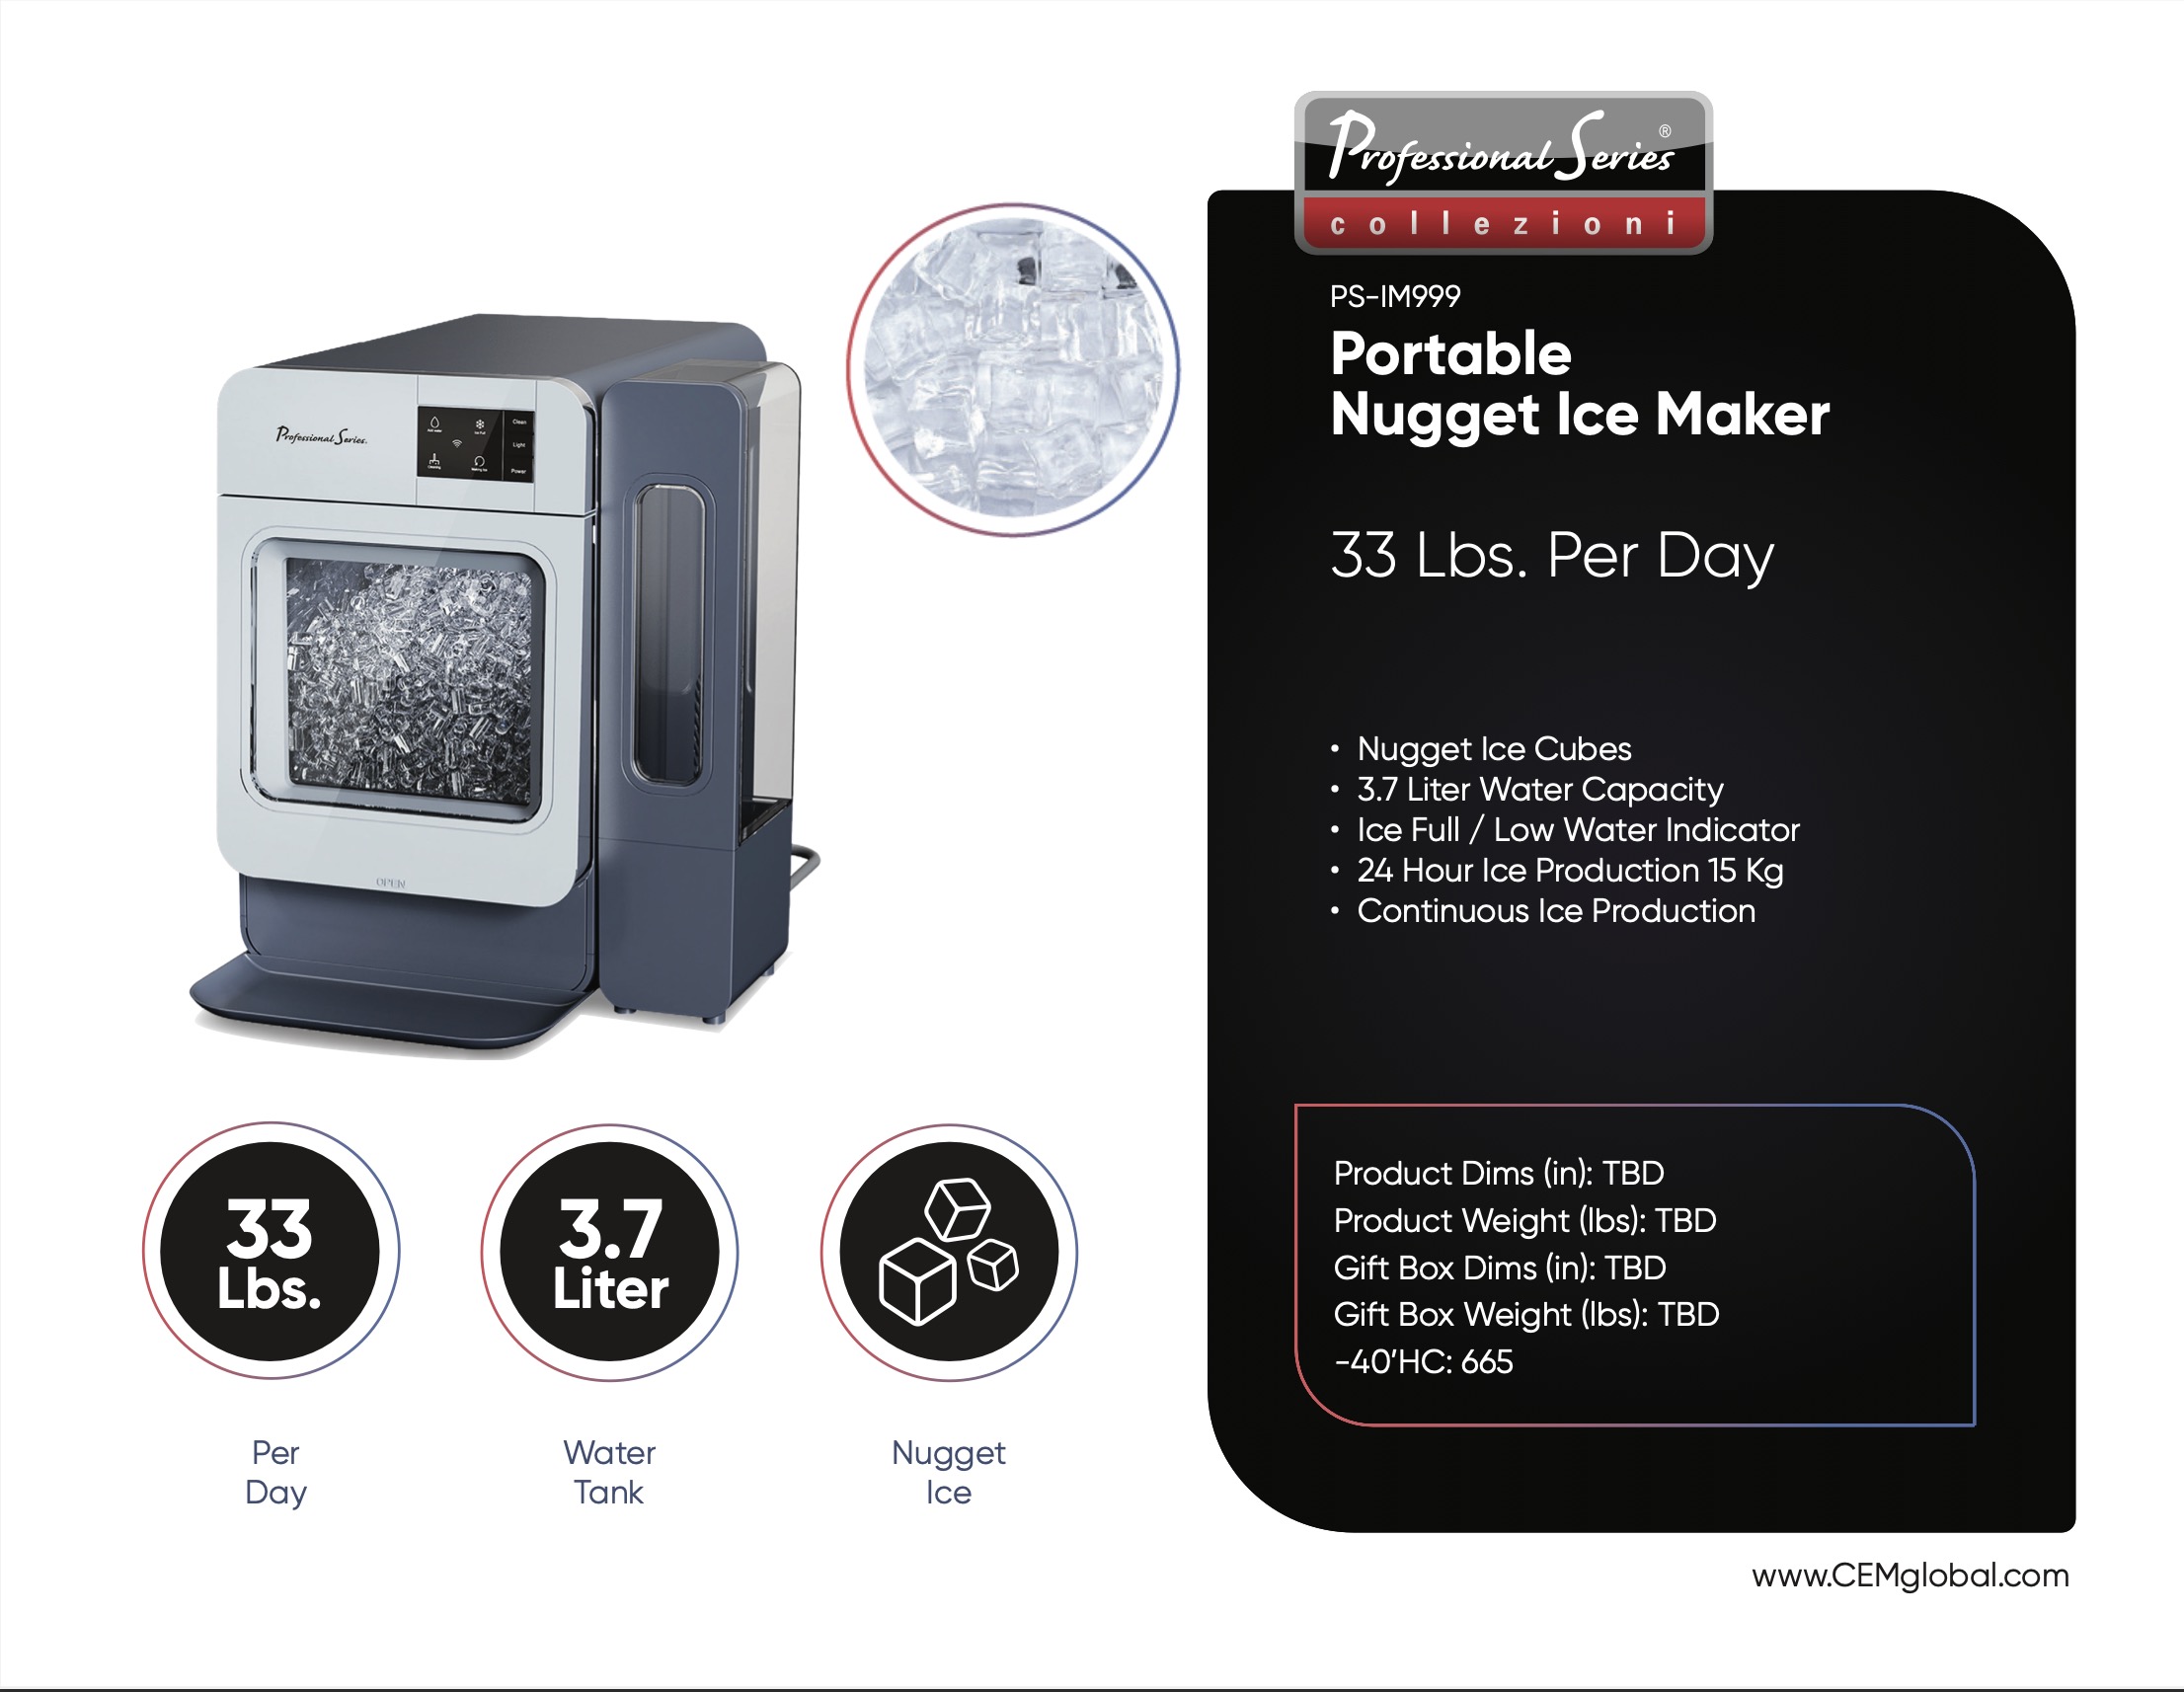 Portable Nugget Ice Maker 33 Lbs. Per Day